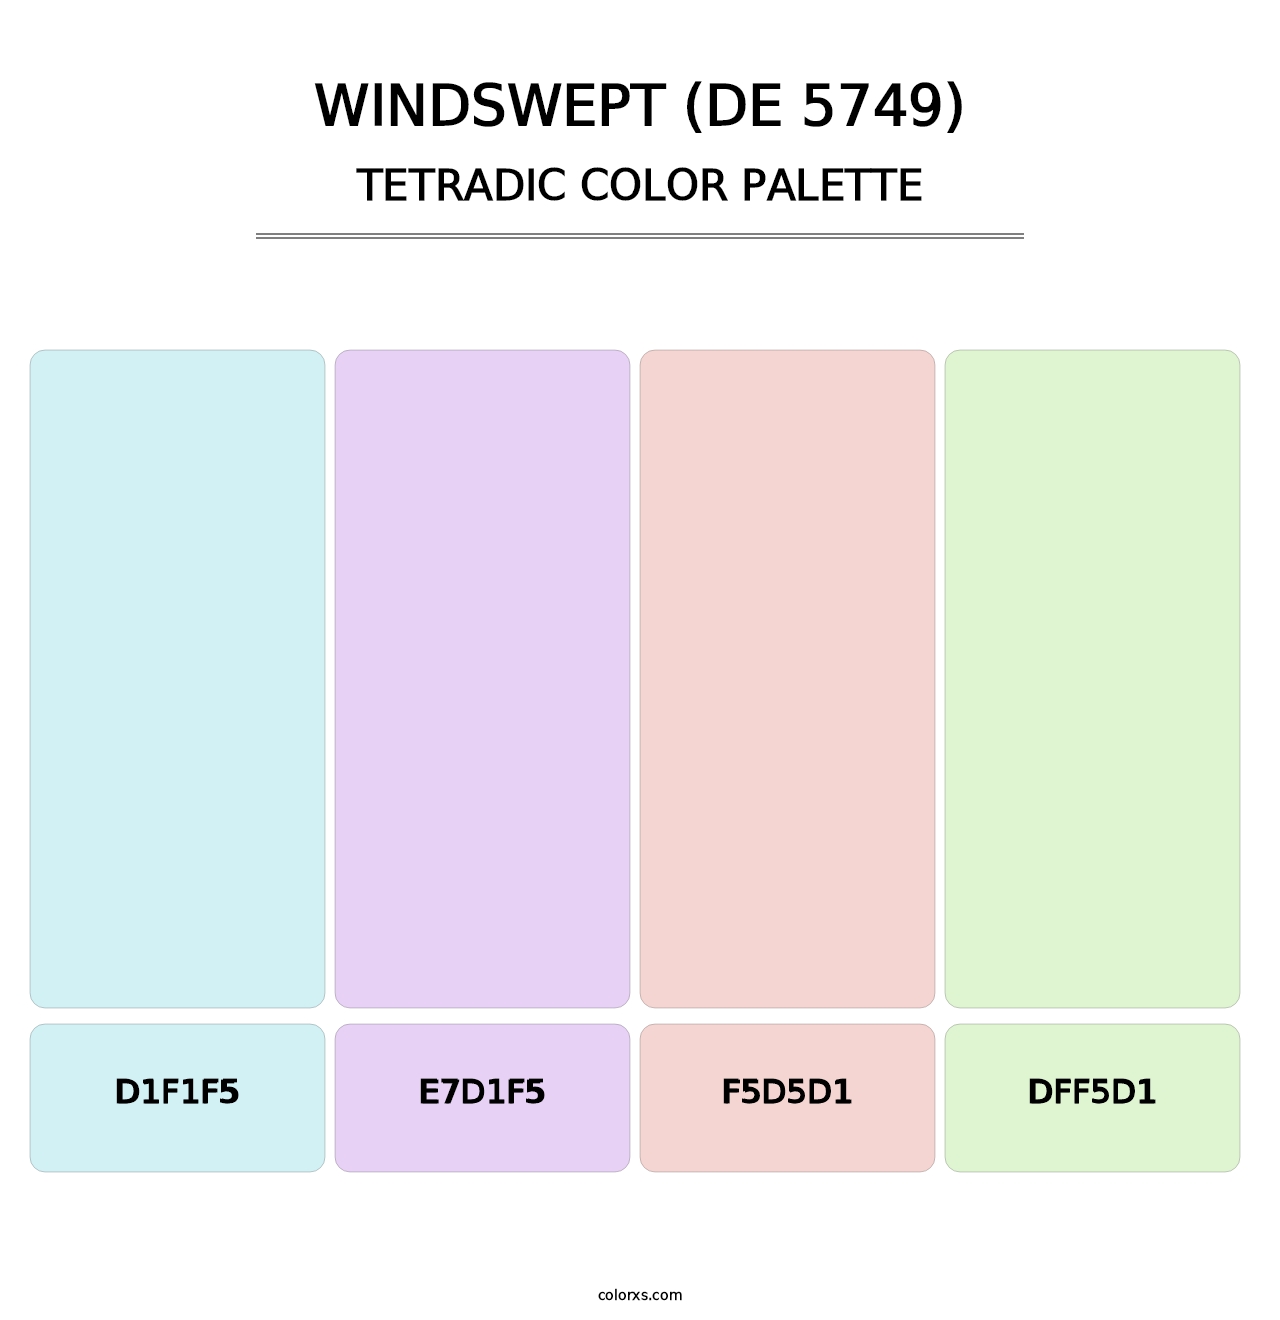 Windswept (DE 5749) - Tetradic Color Palette